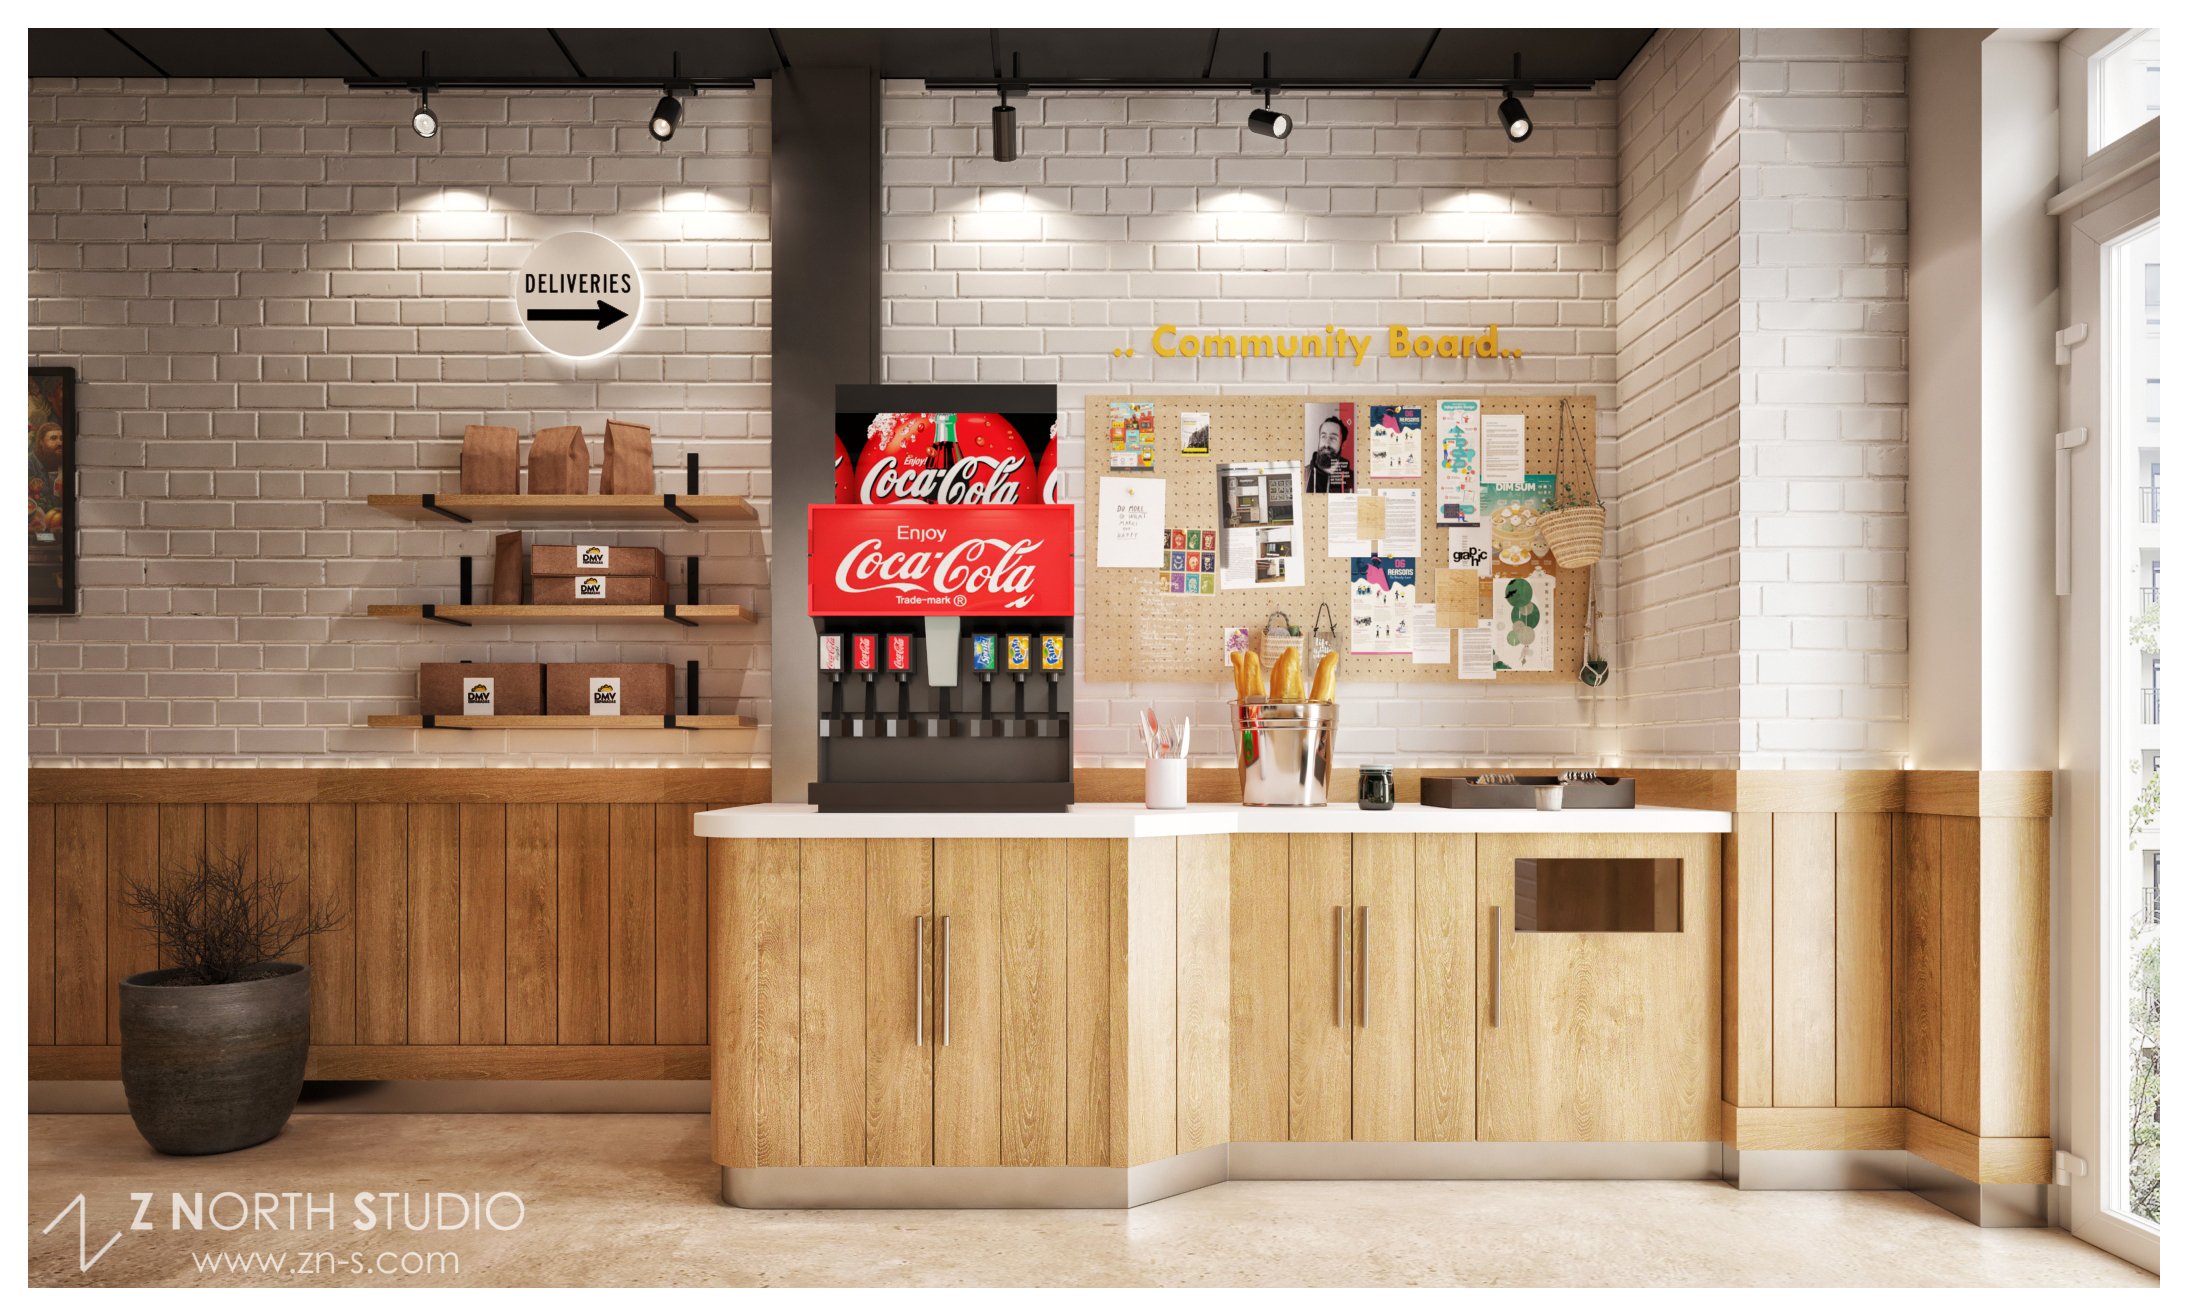 DMV Empanadas - Restaurant Interior Design - Z North Studio (8).jpg